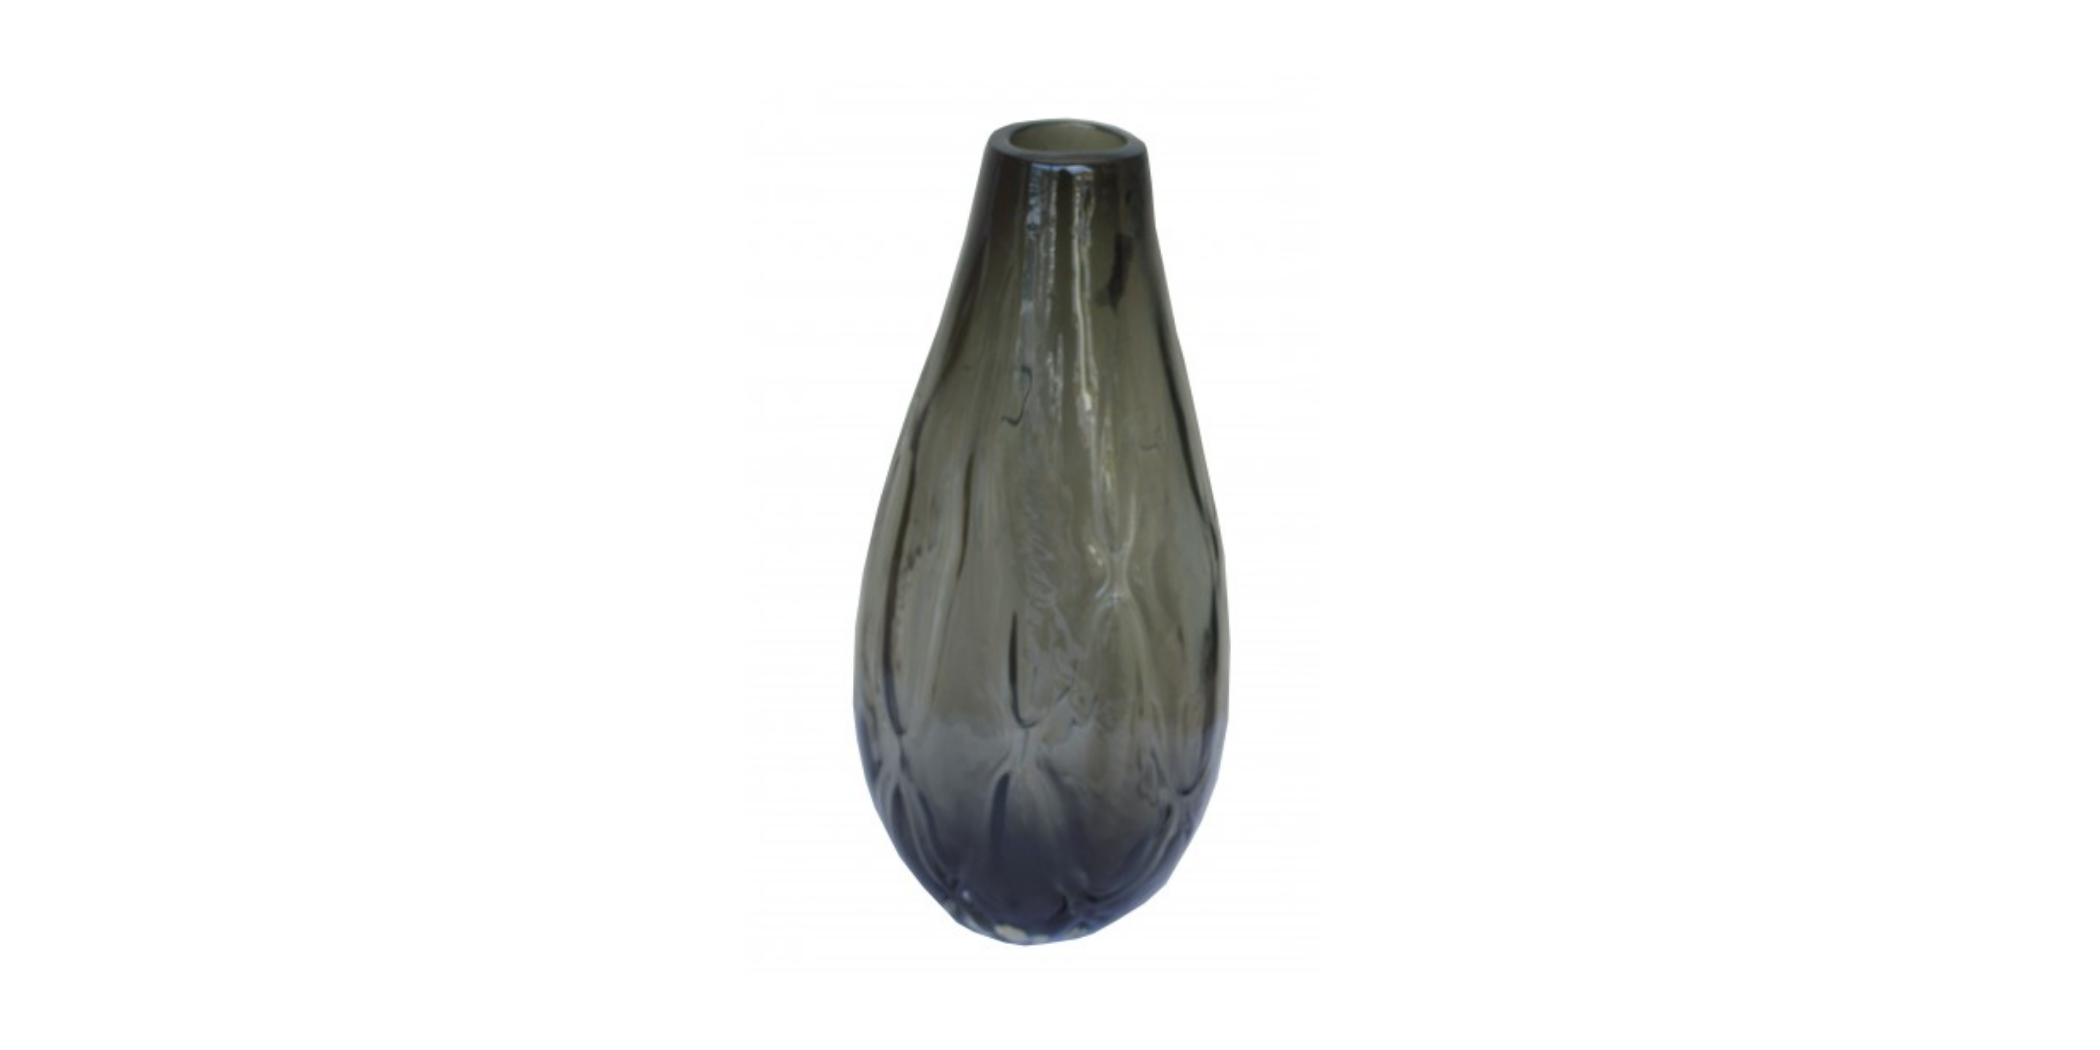 Vase 36cm, black glass